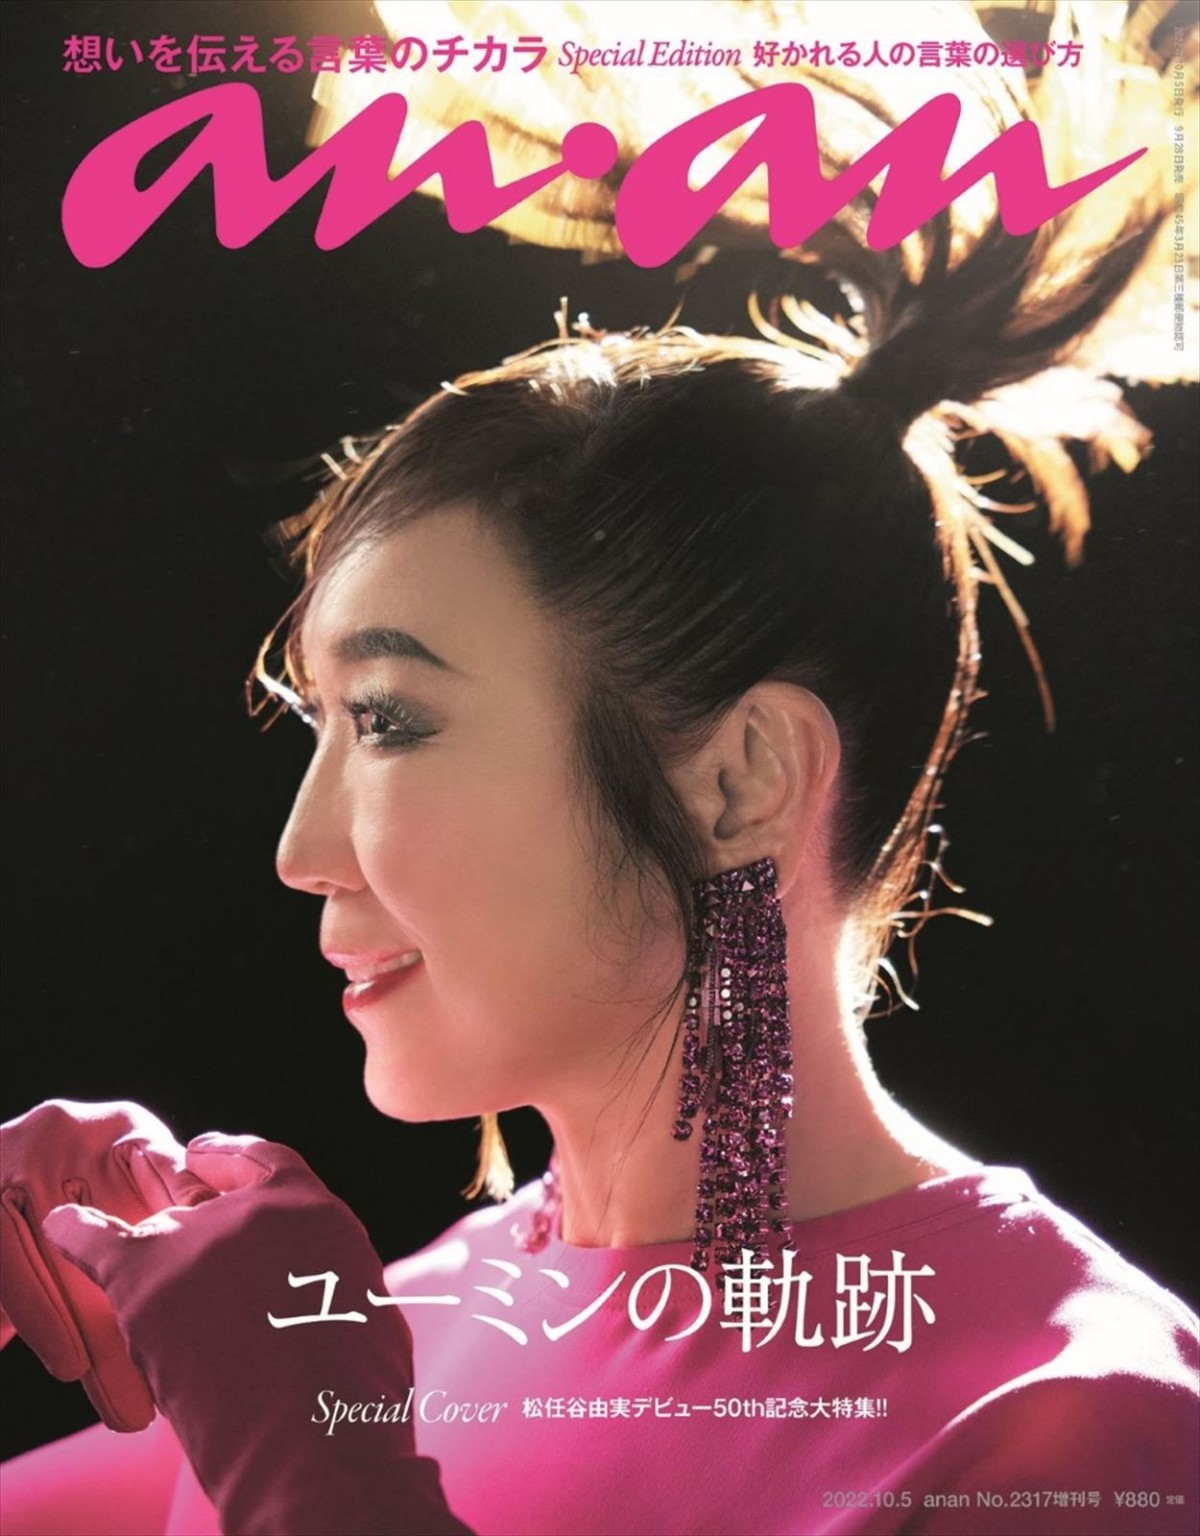 「anan」2317号スペシャルエディション版で、自身初のソロ表紙を飾る松任谷由実